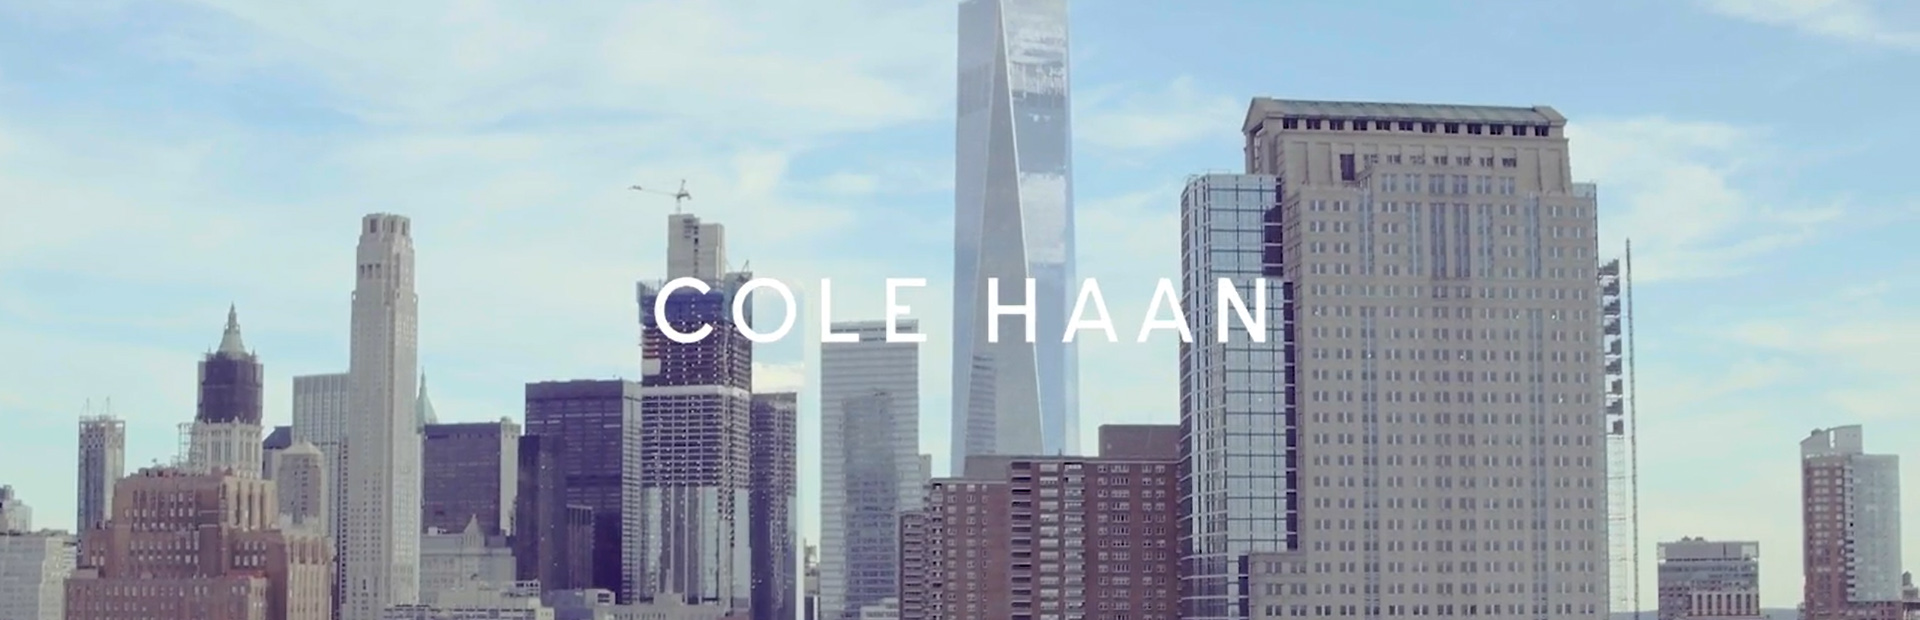 Cole Haan Tees Off with Golf Footwear